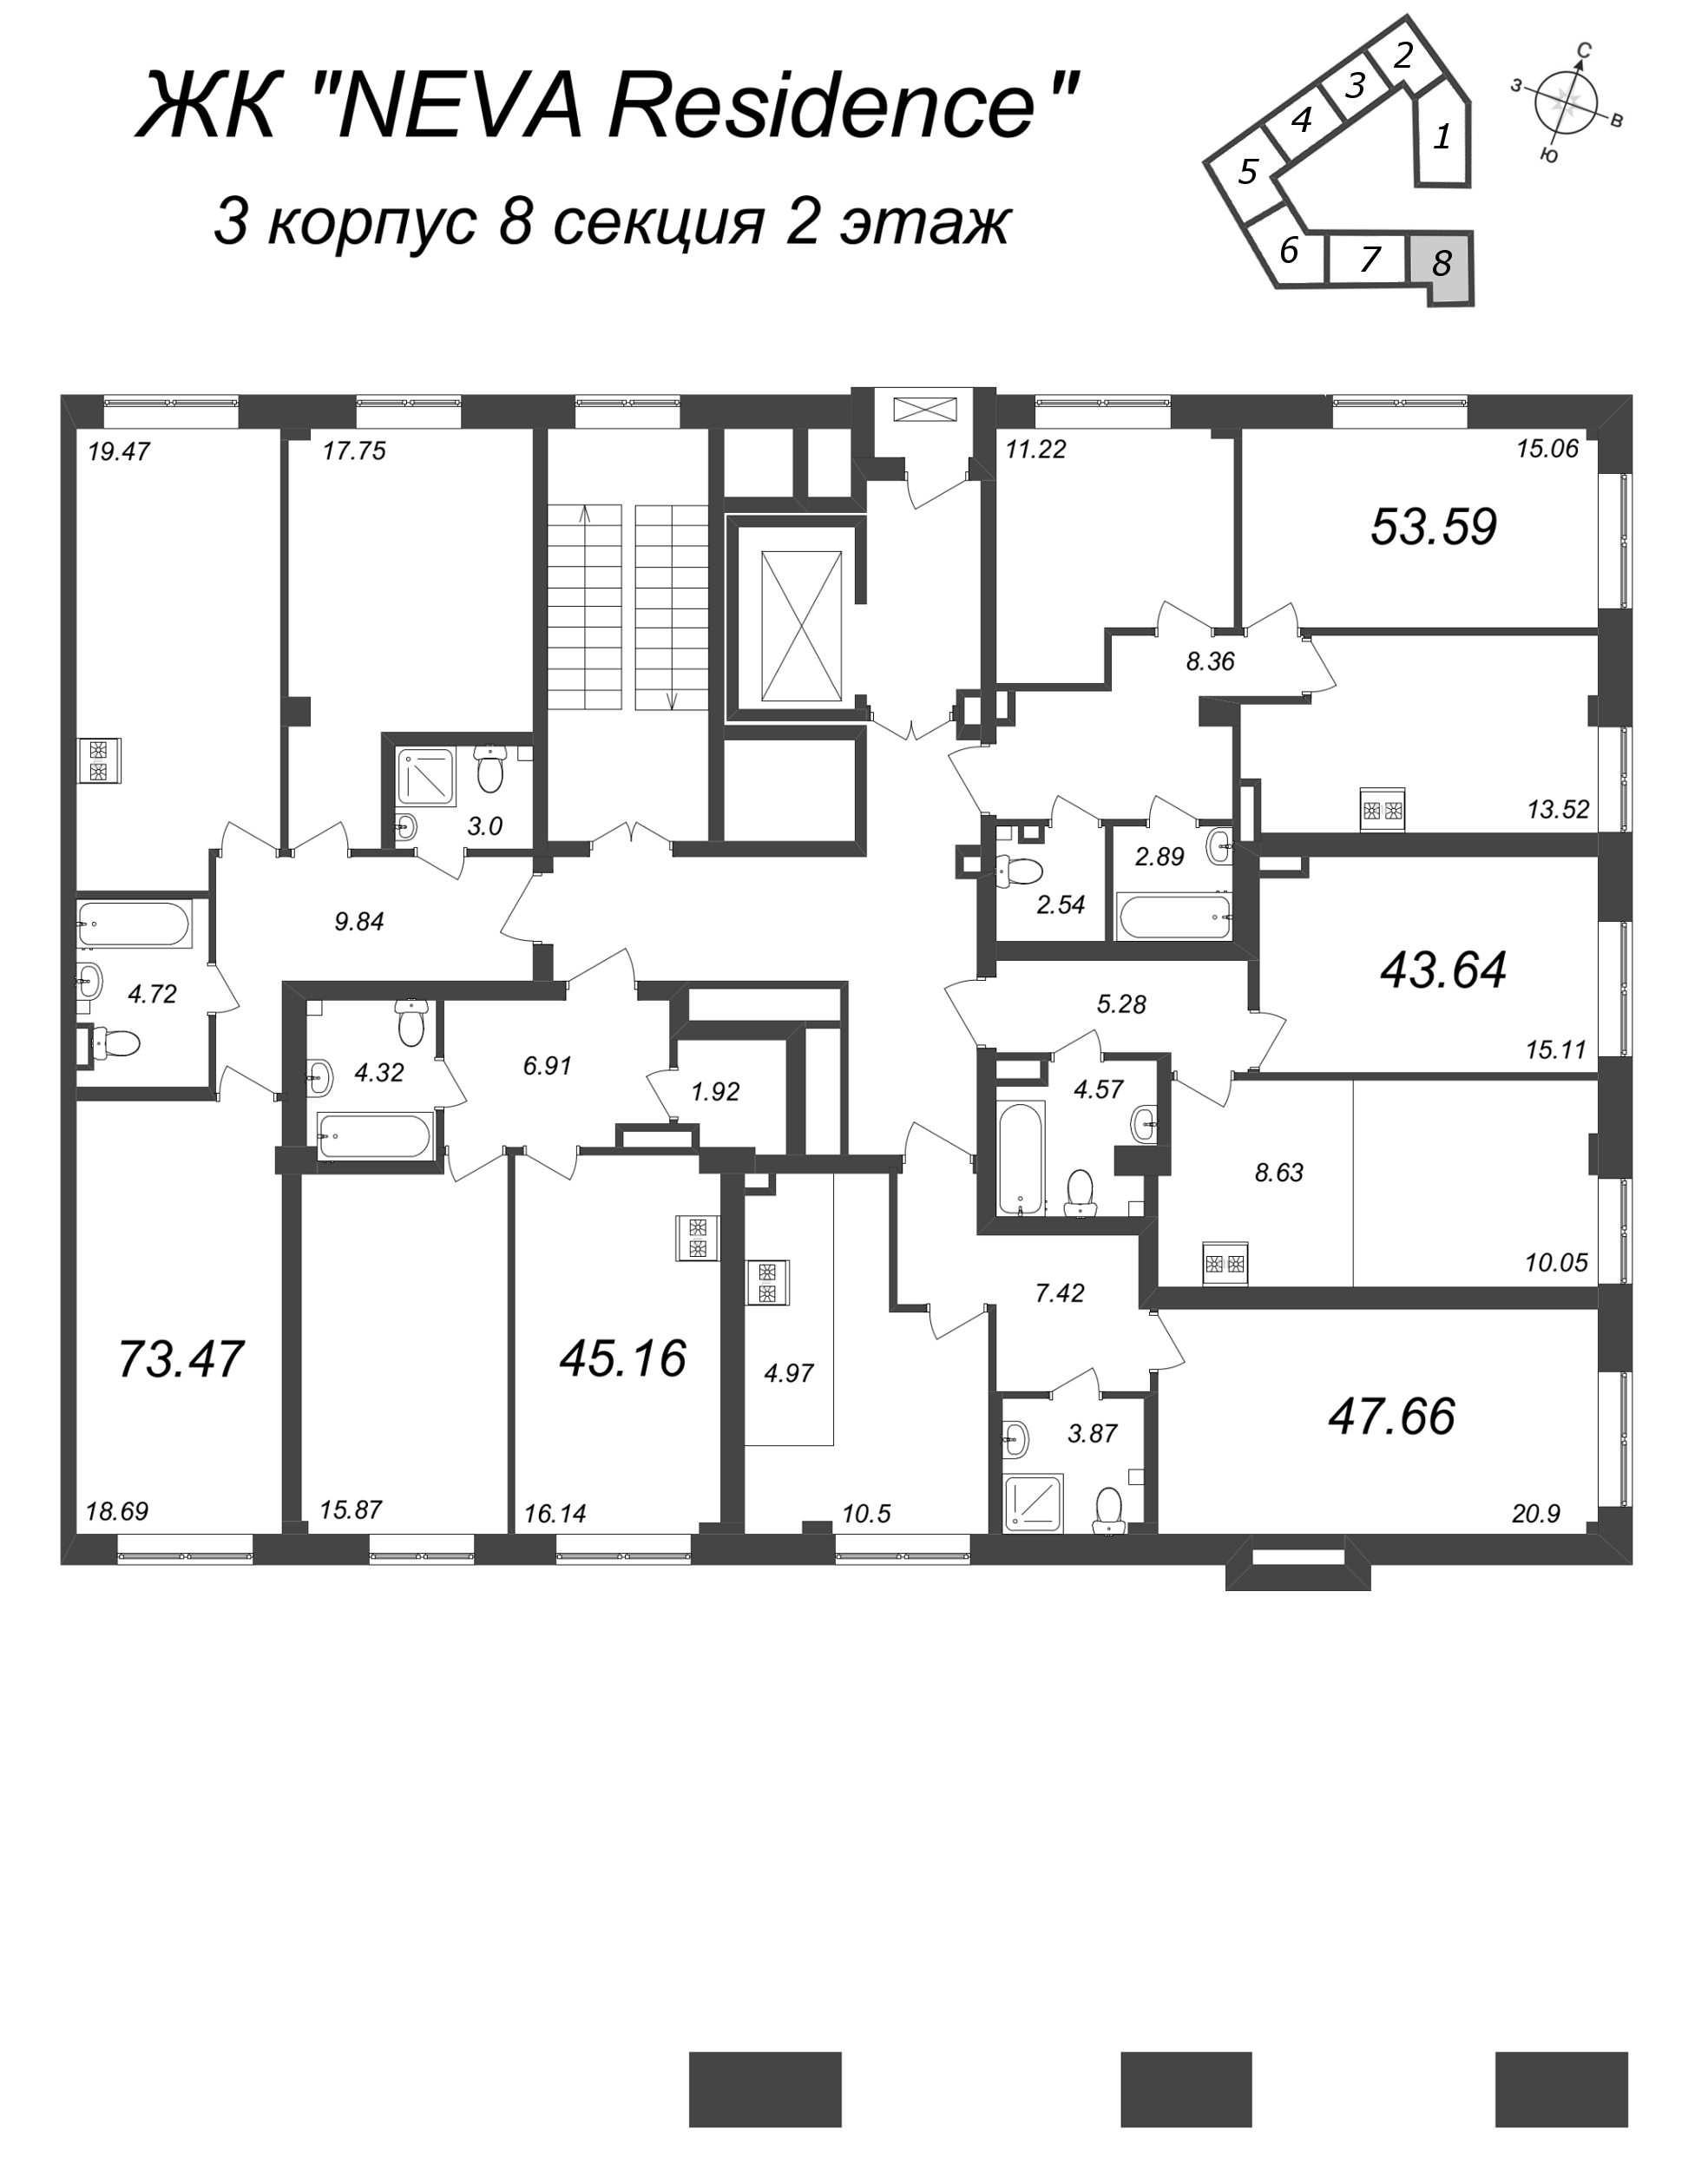 3-комнатная (Евро) квартира, 73.47 м² - планировка этажа